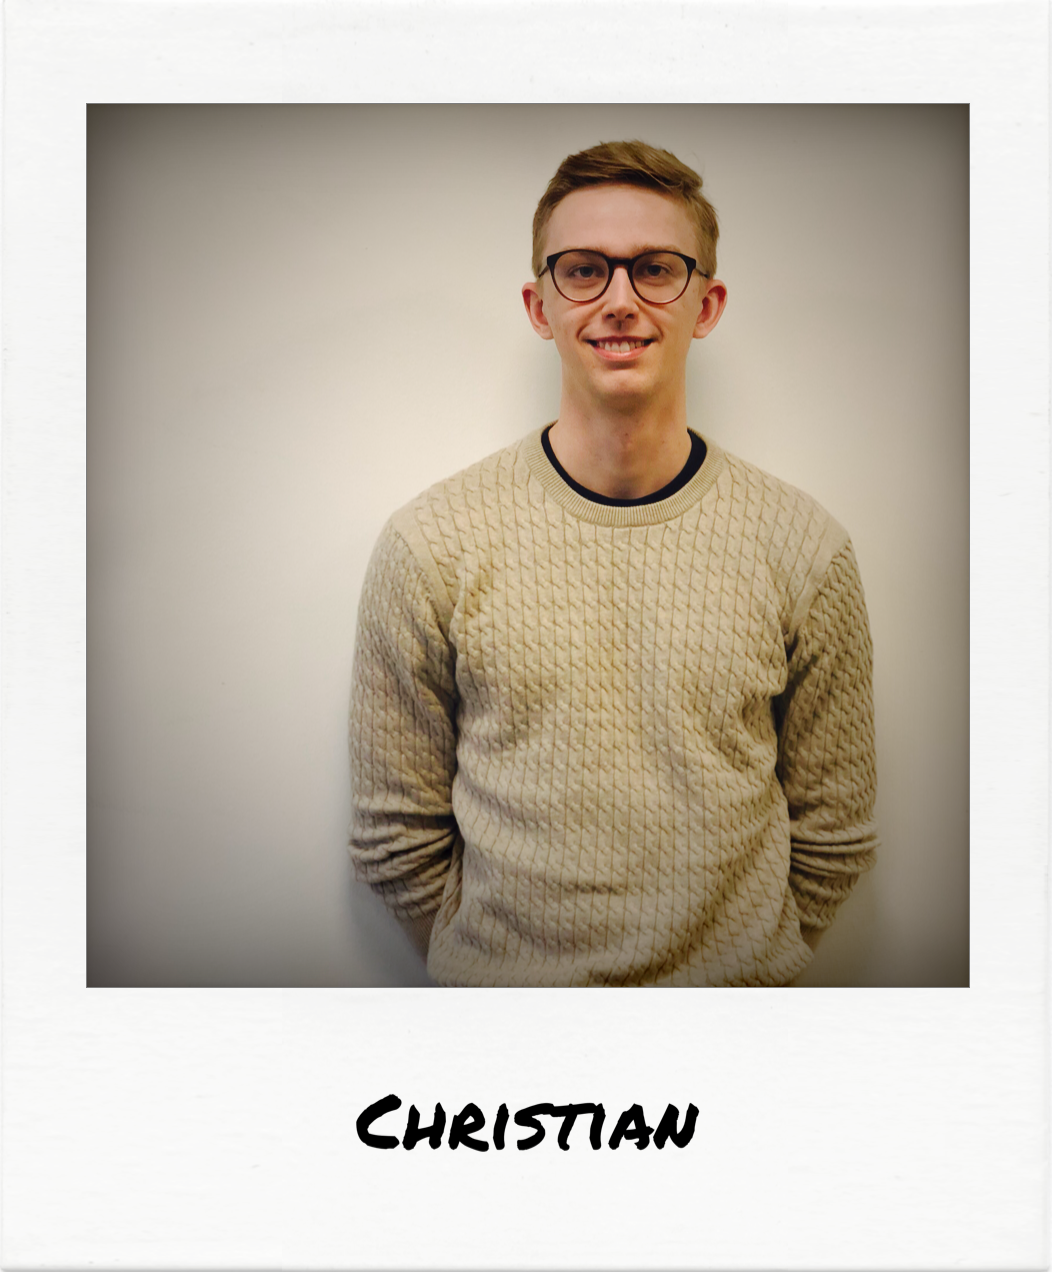 Christian, 21, studies IMK at CBS